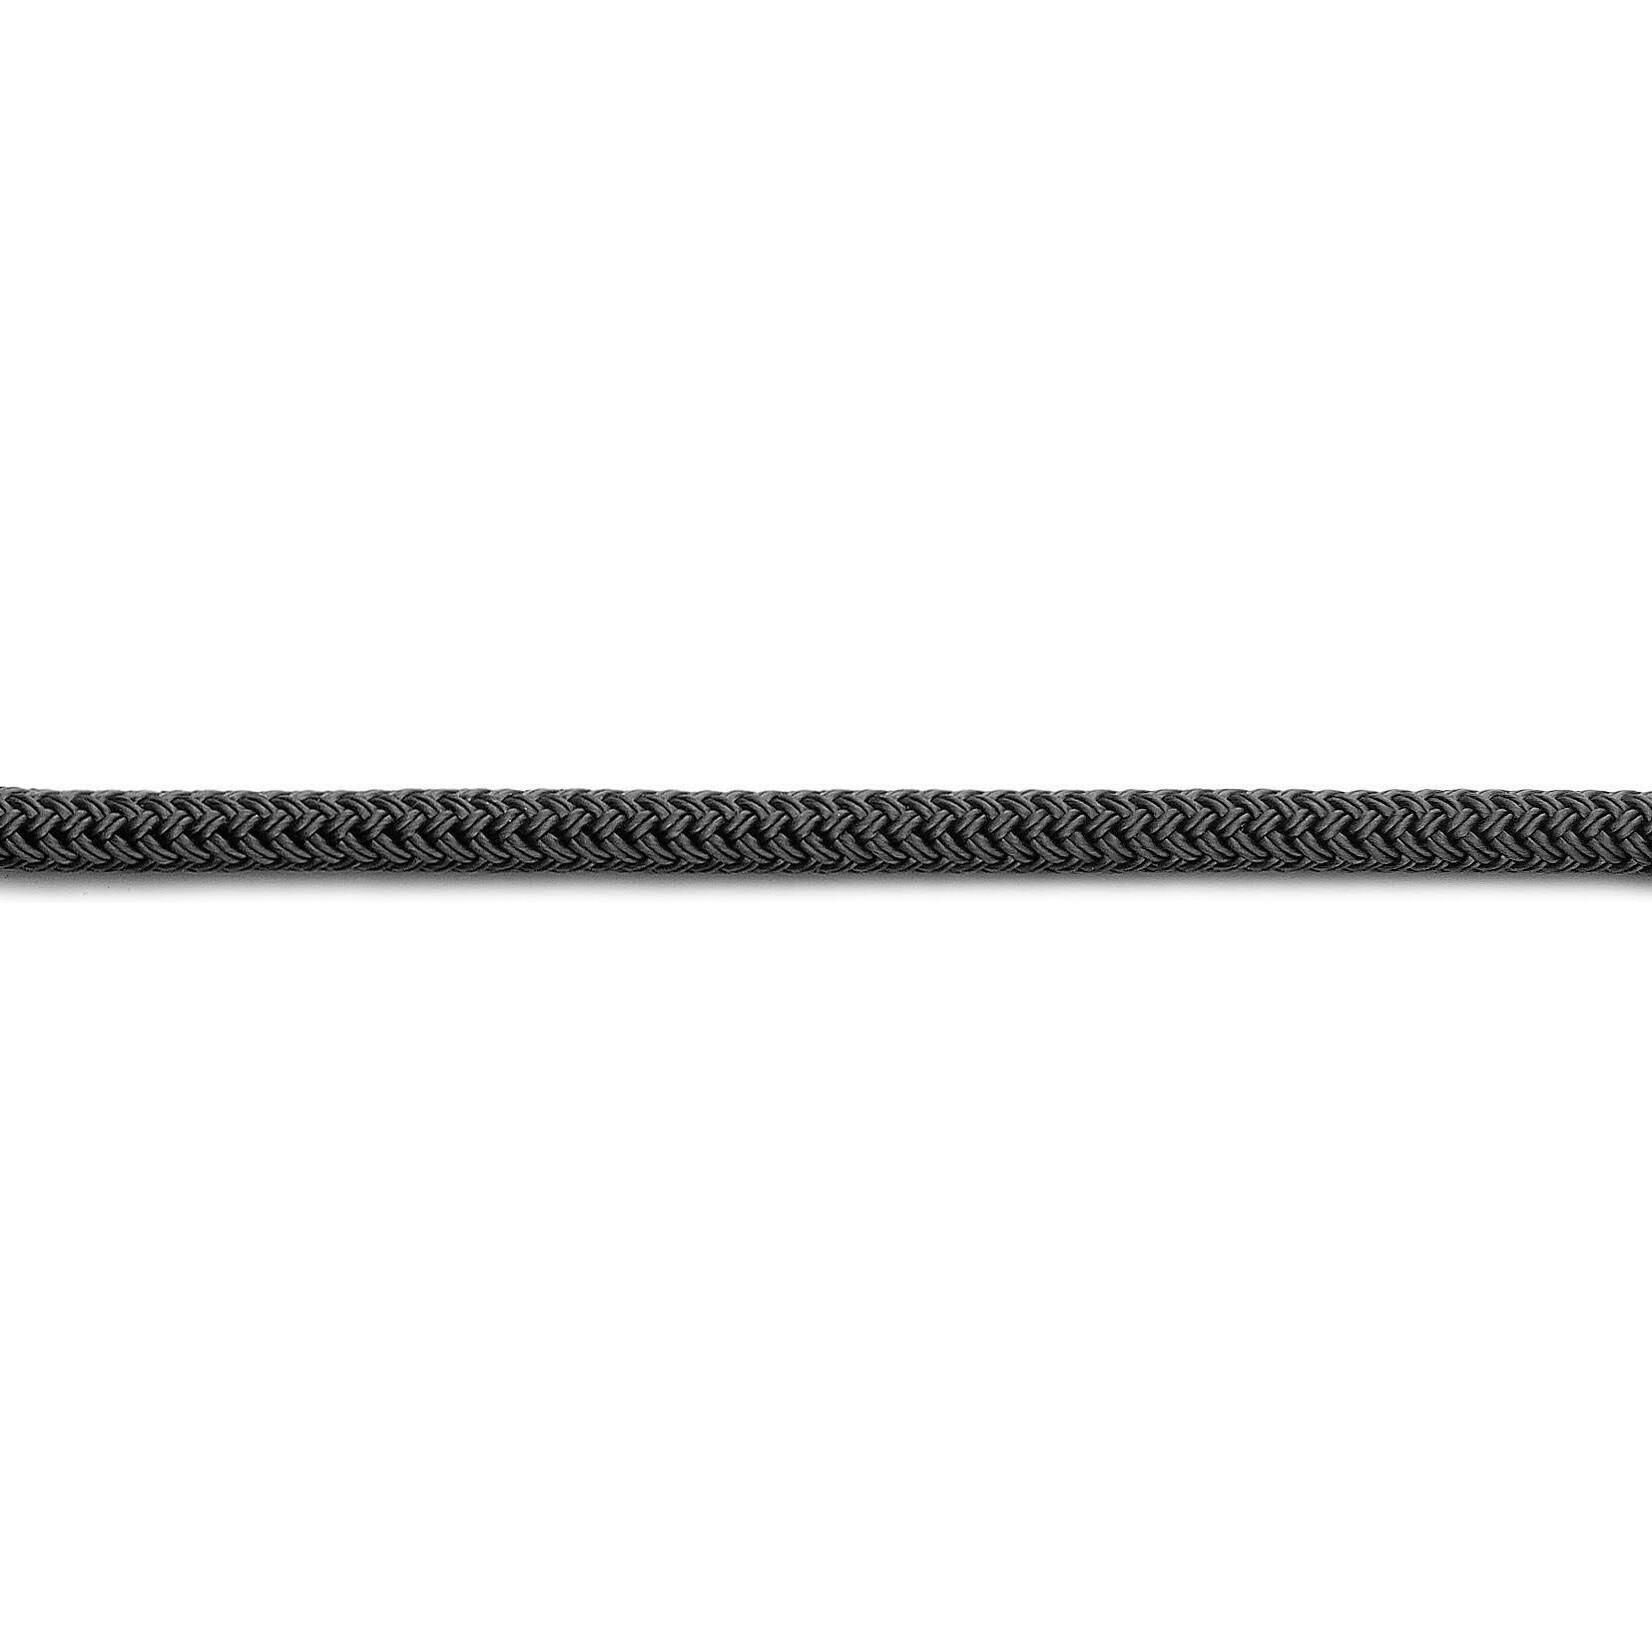 Marlow Doublebraid 10mm. Solid Black